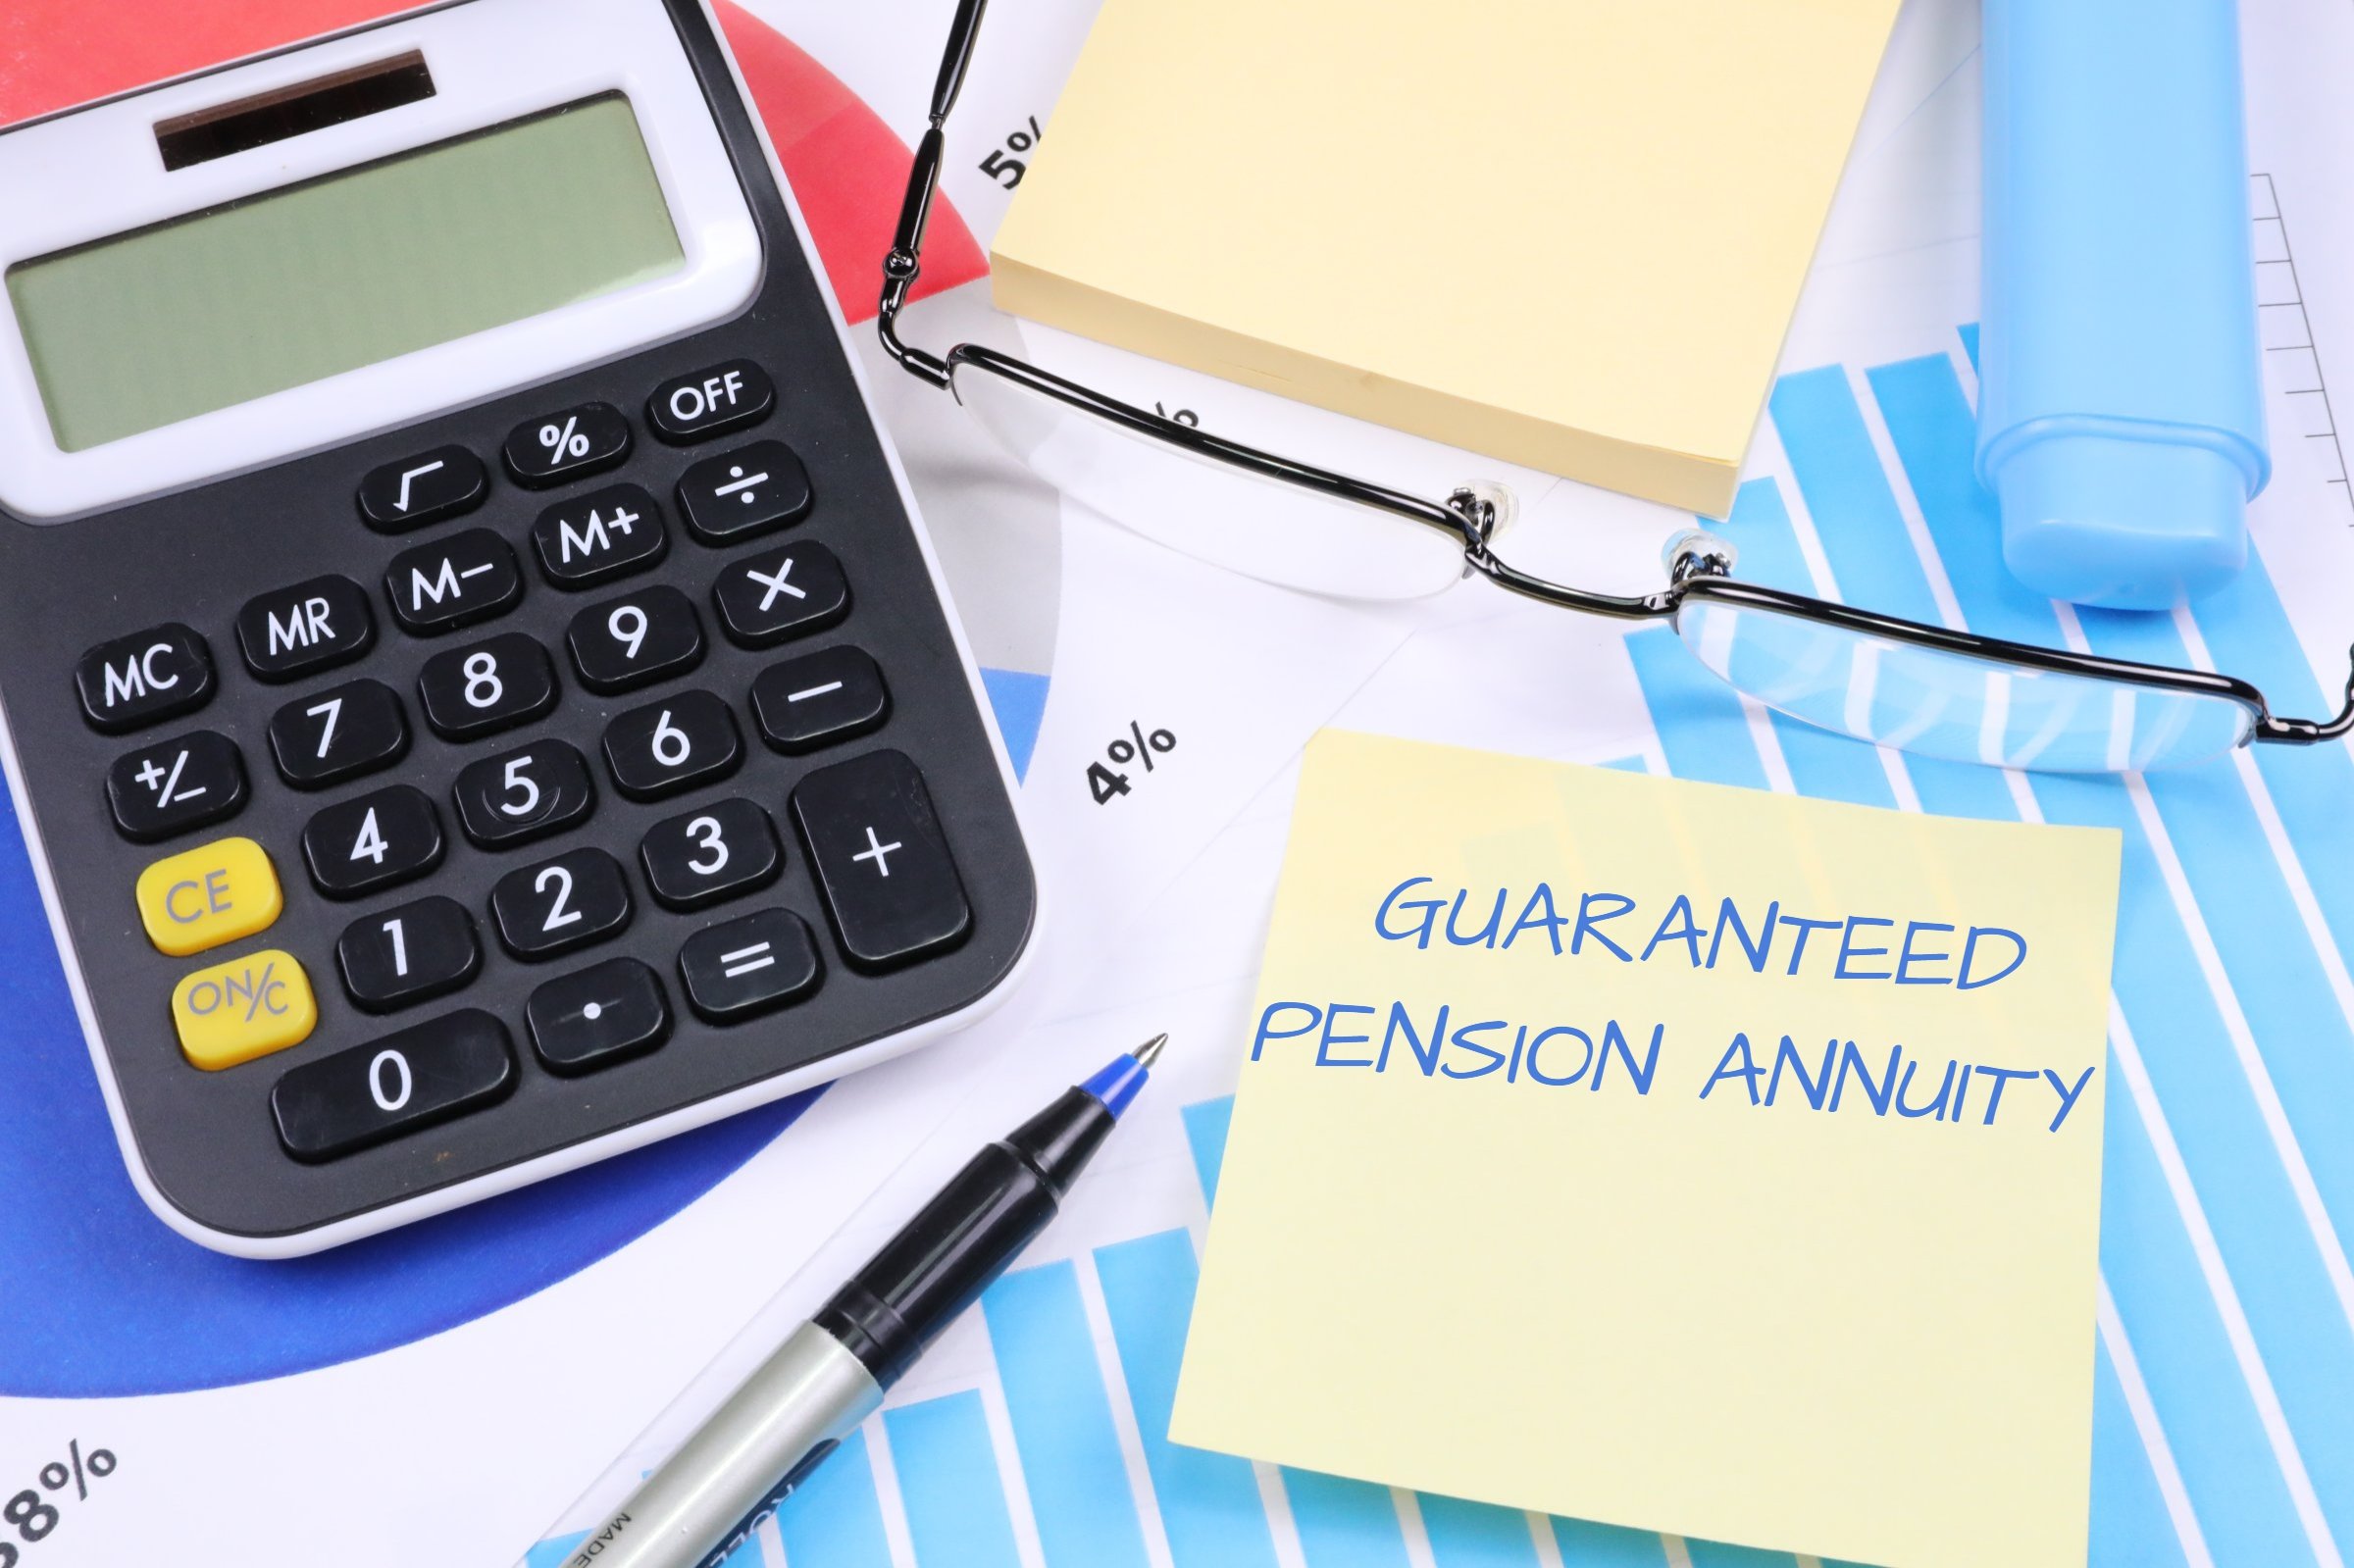 Guaranteed Pension Annuity